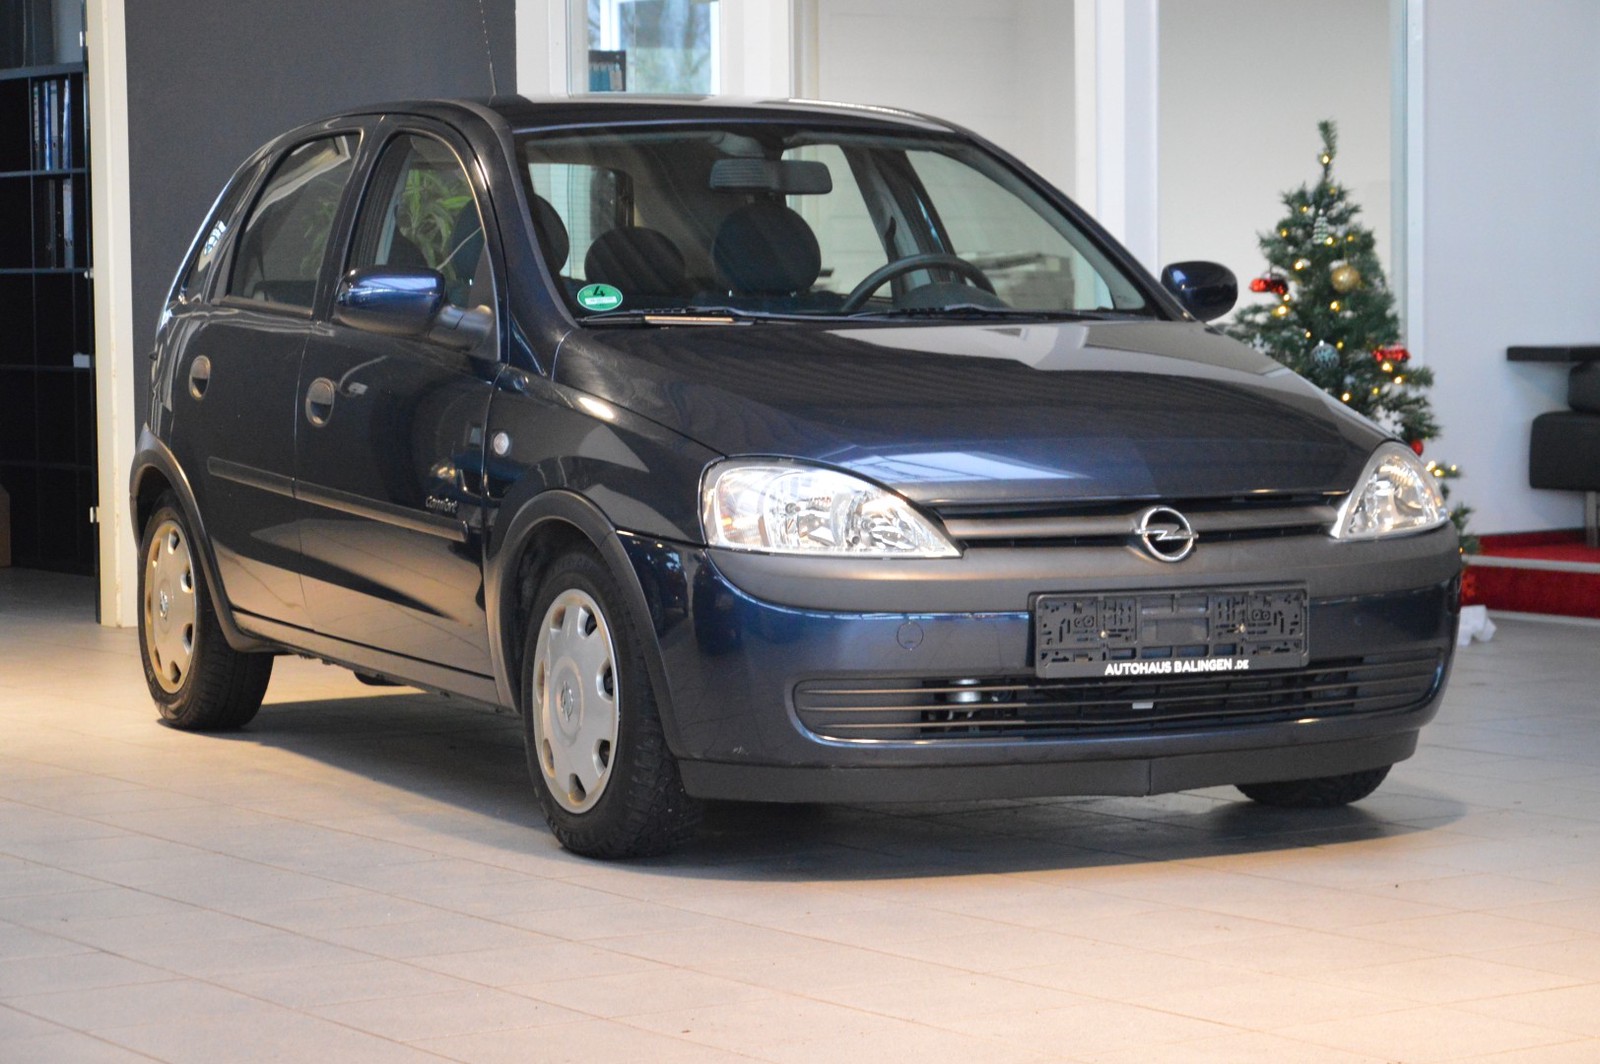 Opel Corsa C Comfort Gebraucht Kaufen In Balingen Preis 990 Eur Int Nr 1301 Verkauft